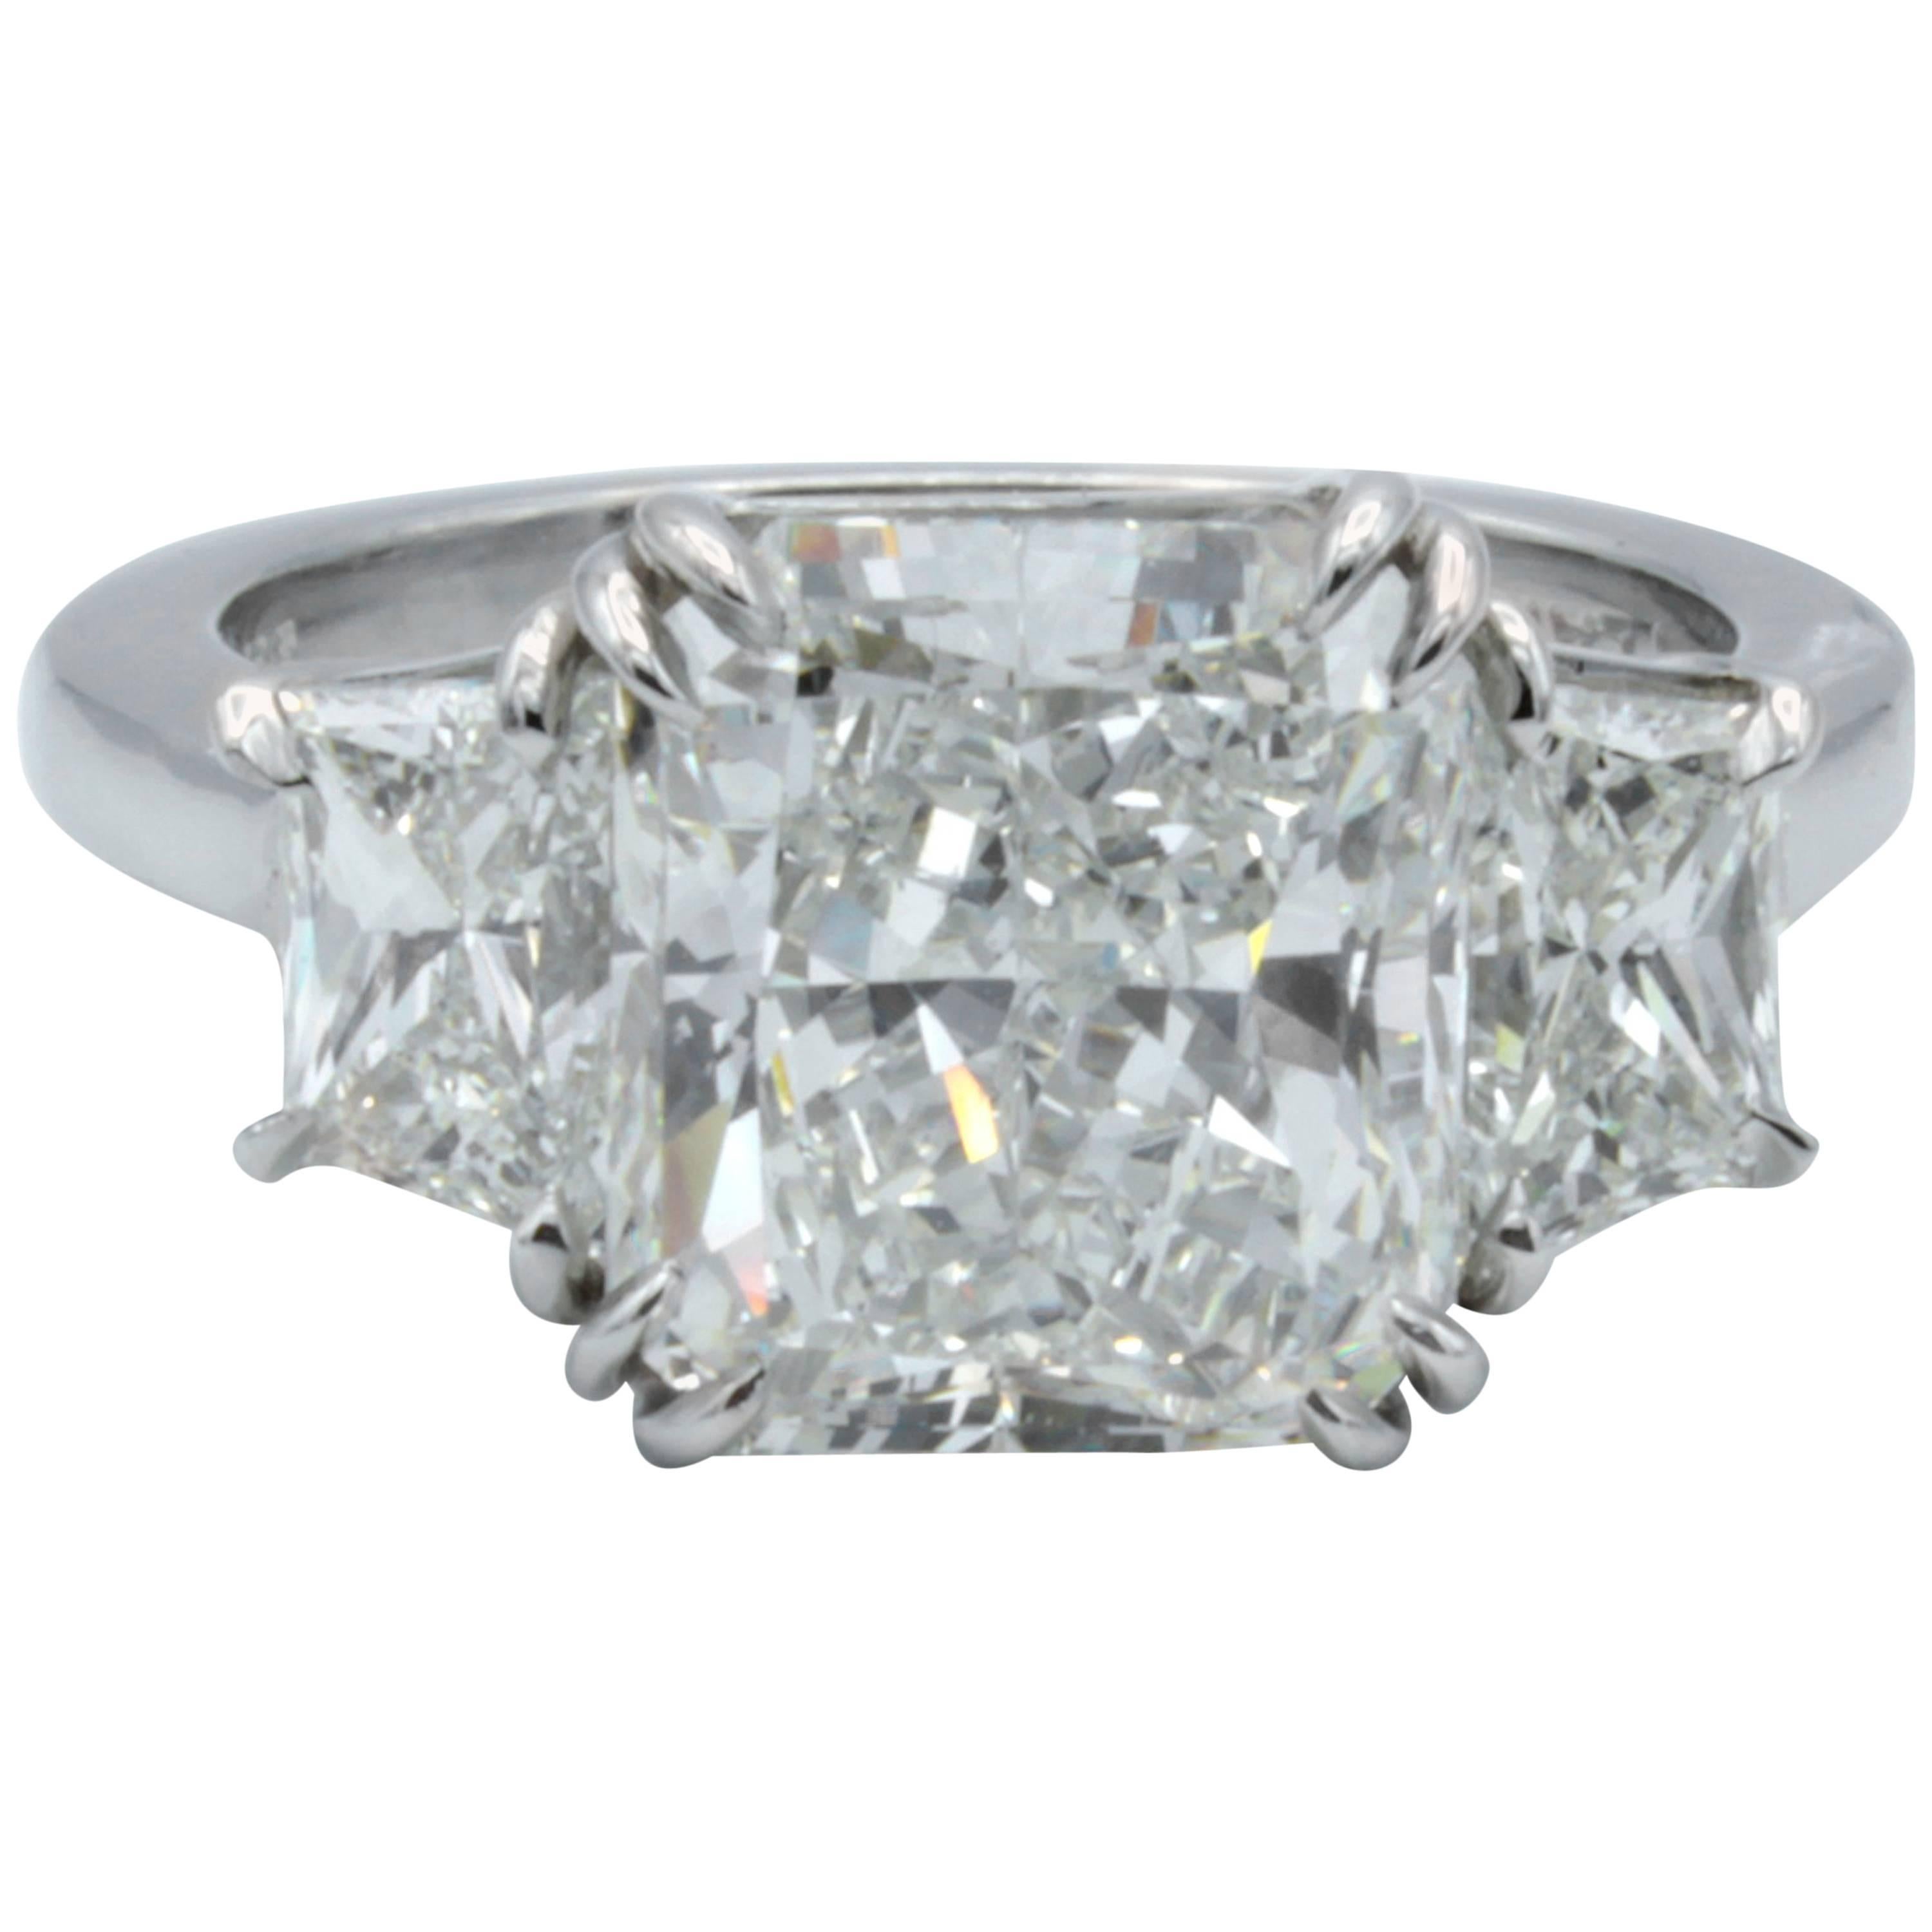 David Rosenberg 4.34 Carat Radiant Cut GIA Certified G/VS Platinum Diamond Ring